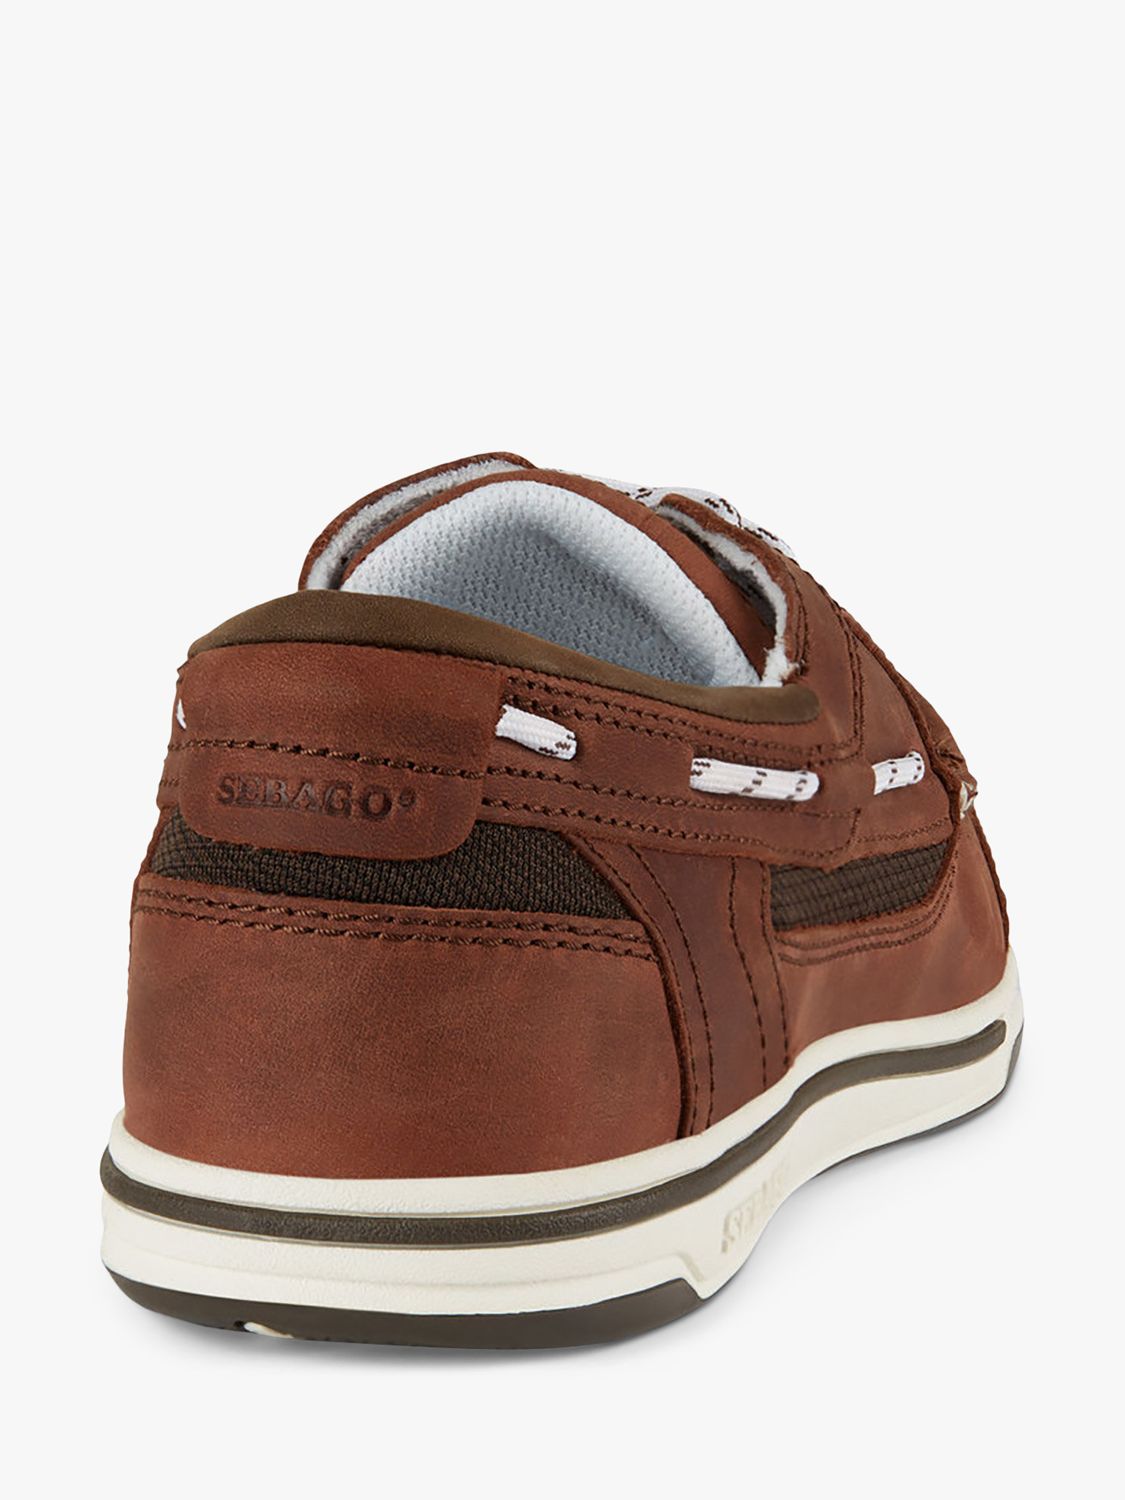 Sebago Triton Leather Boat Shoes, Dark Brown, 10